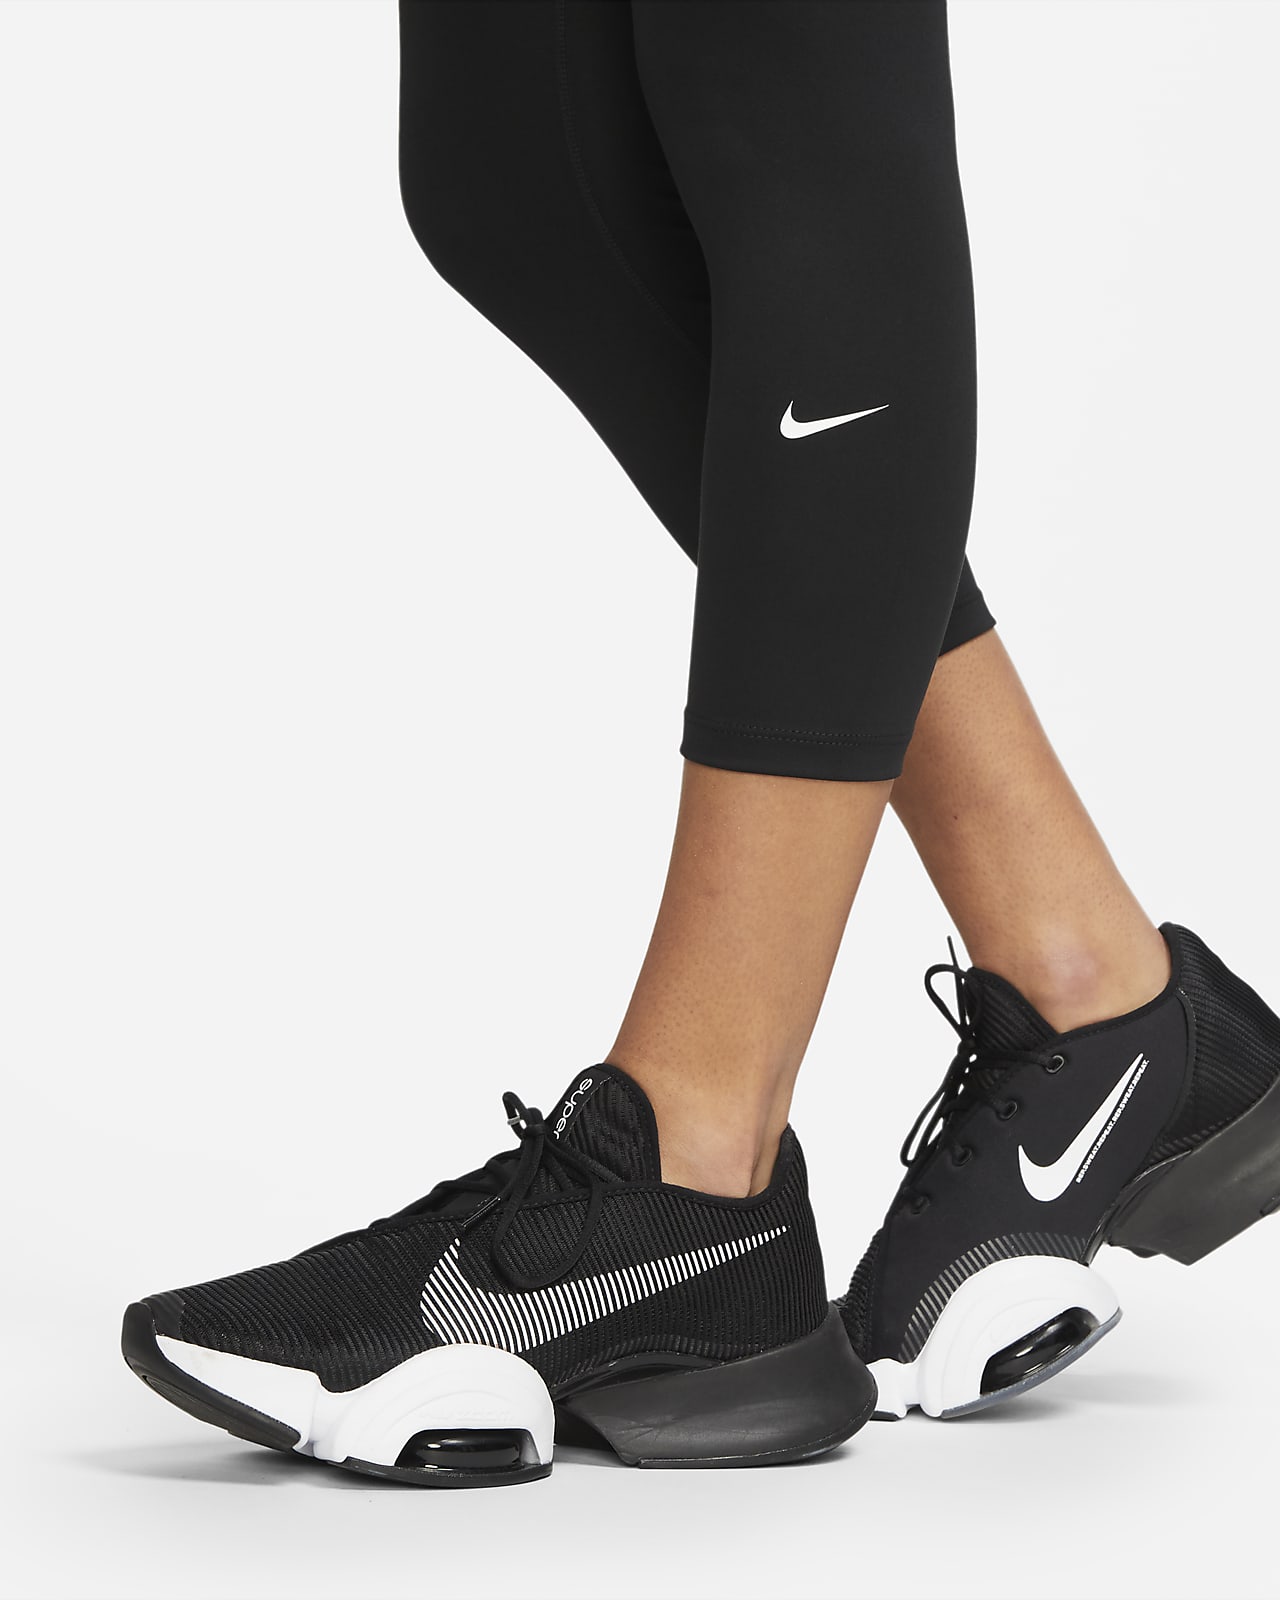 Legging court taille haute Nike One pour femme